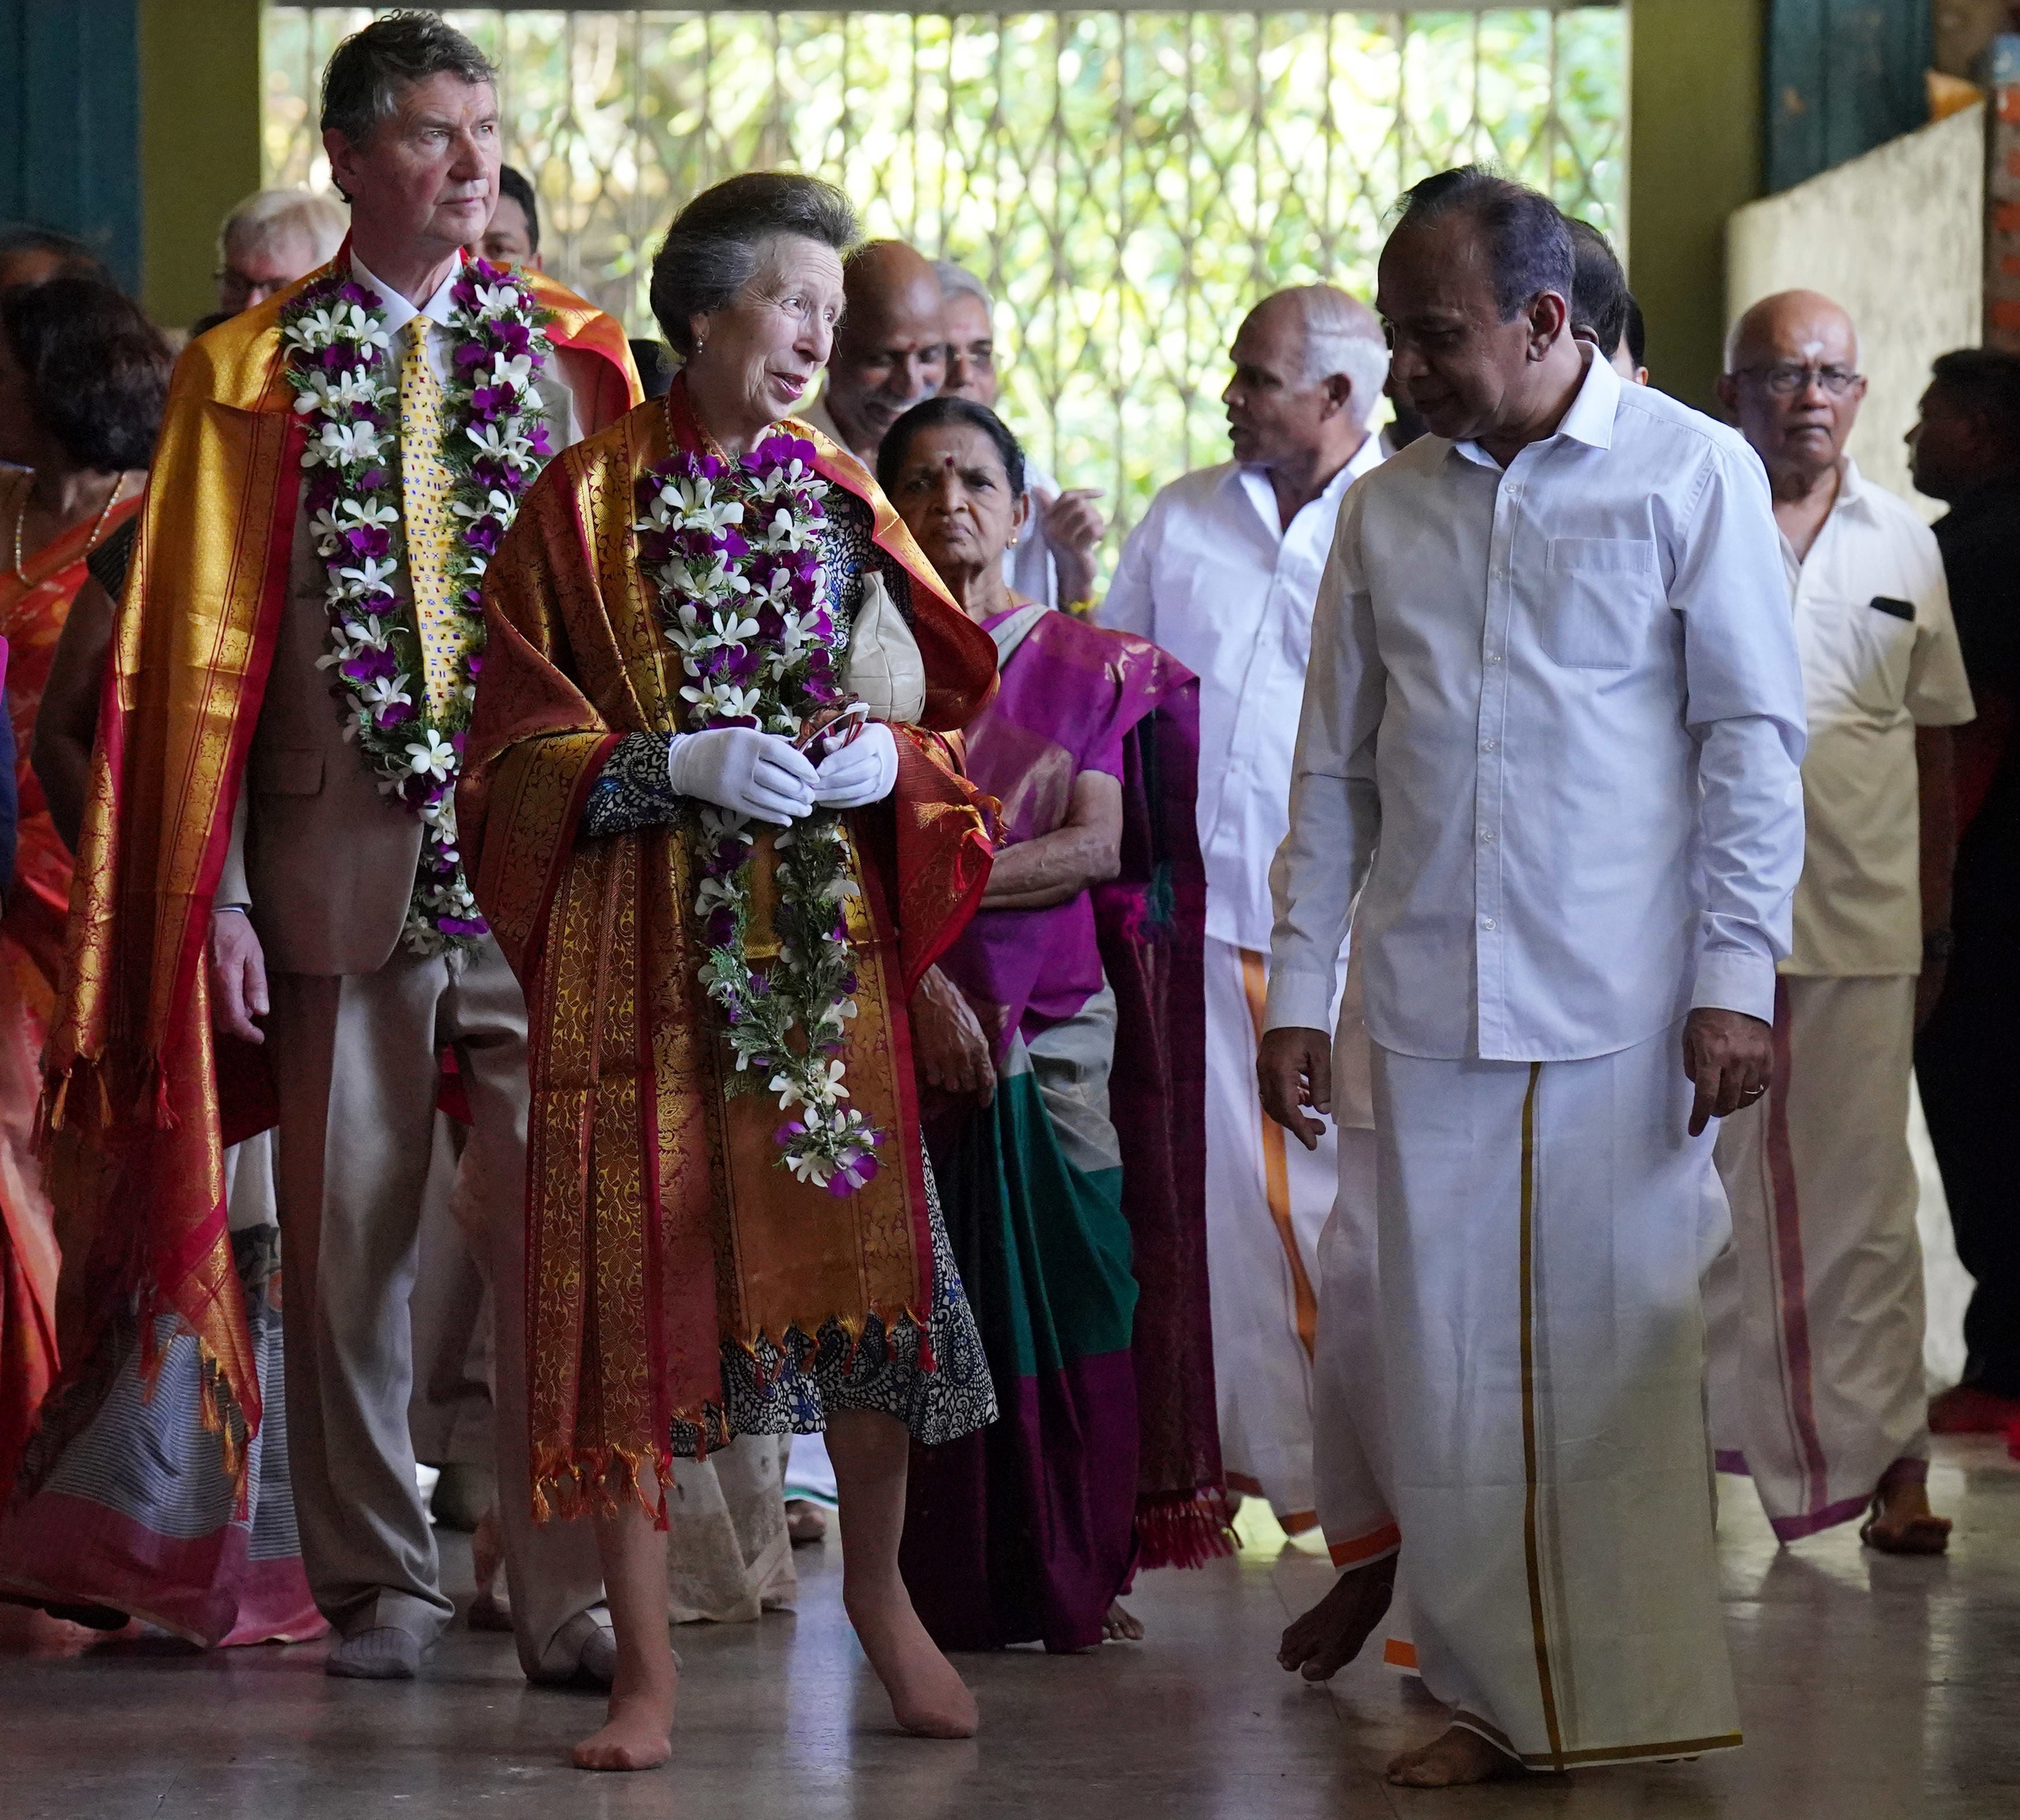 The Princess Royal and her husband Vice Admiral Sir Timothy Laurence during a visit to Vajira Pillayar Kovil Hindu temple in Colombo, Sri Lanka